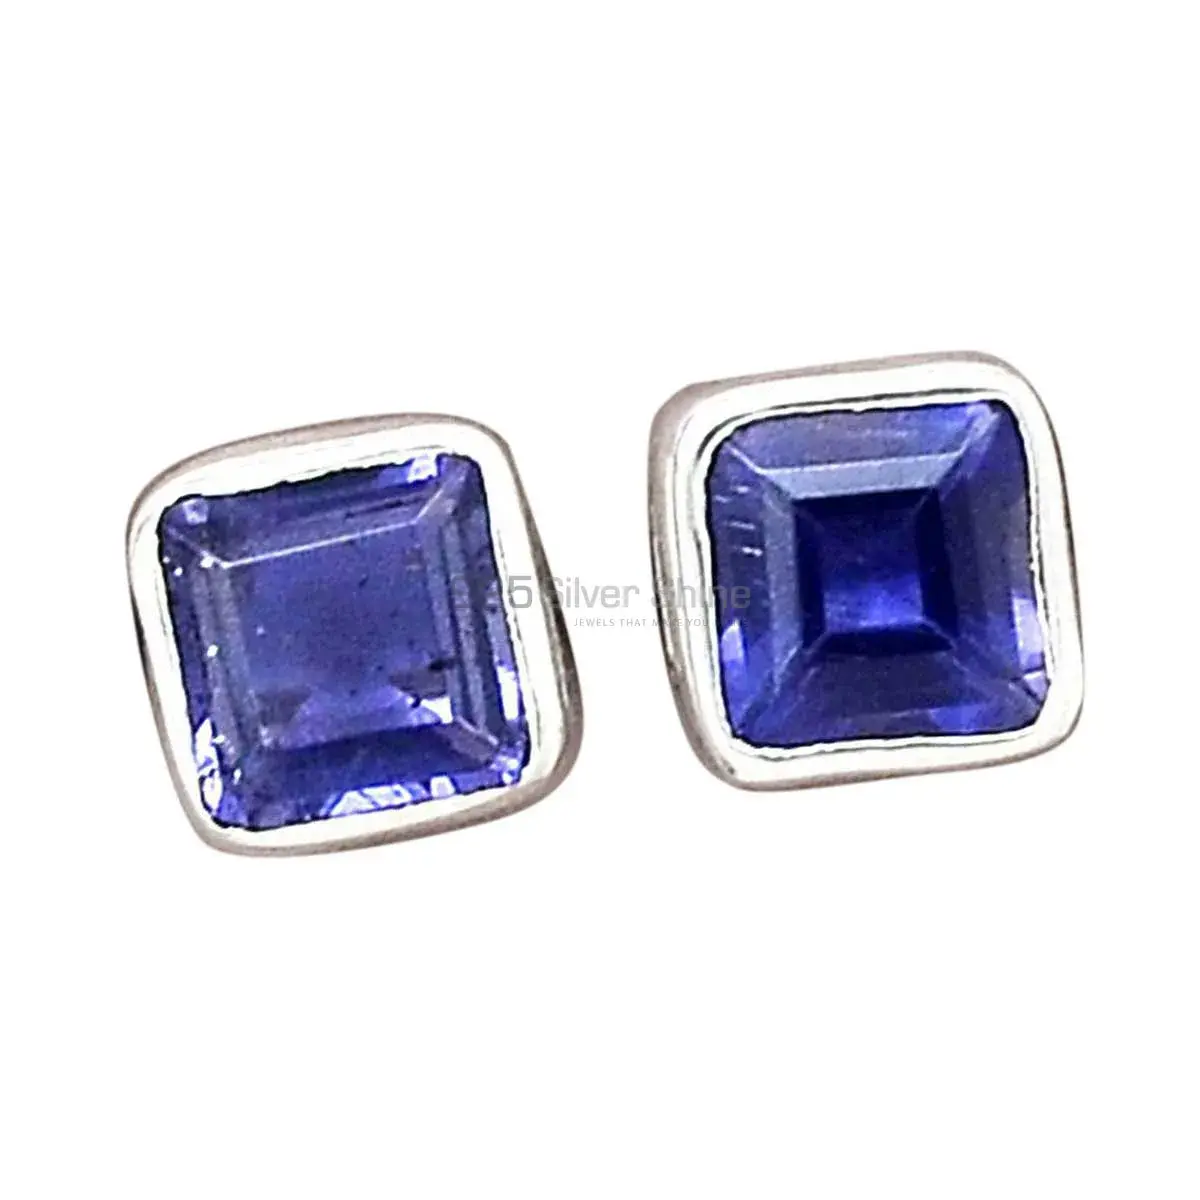 Best Quality 925 Sterling Silver Earrings In Iolite Gemstone Jewelry 925SE2217_6